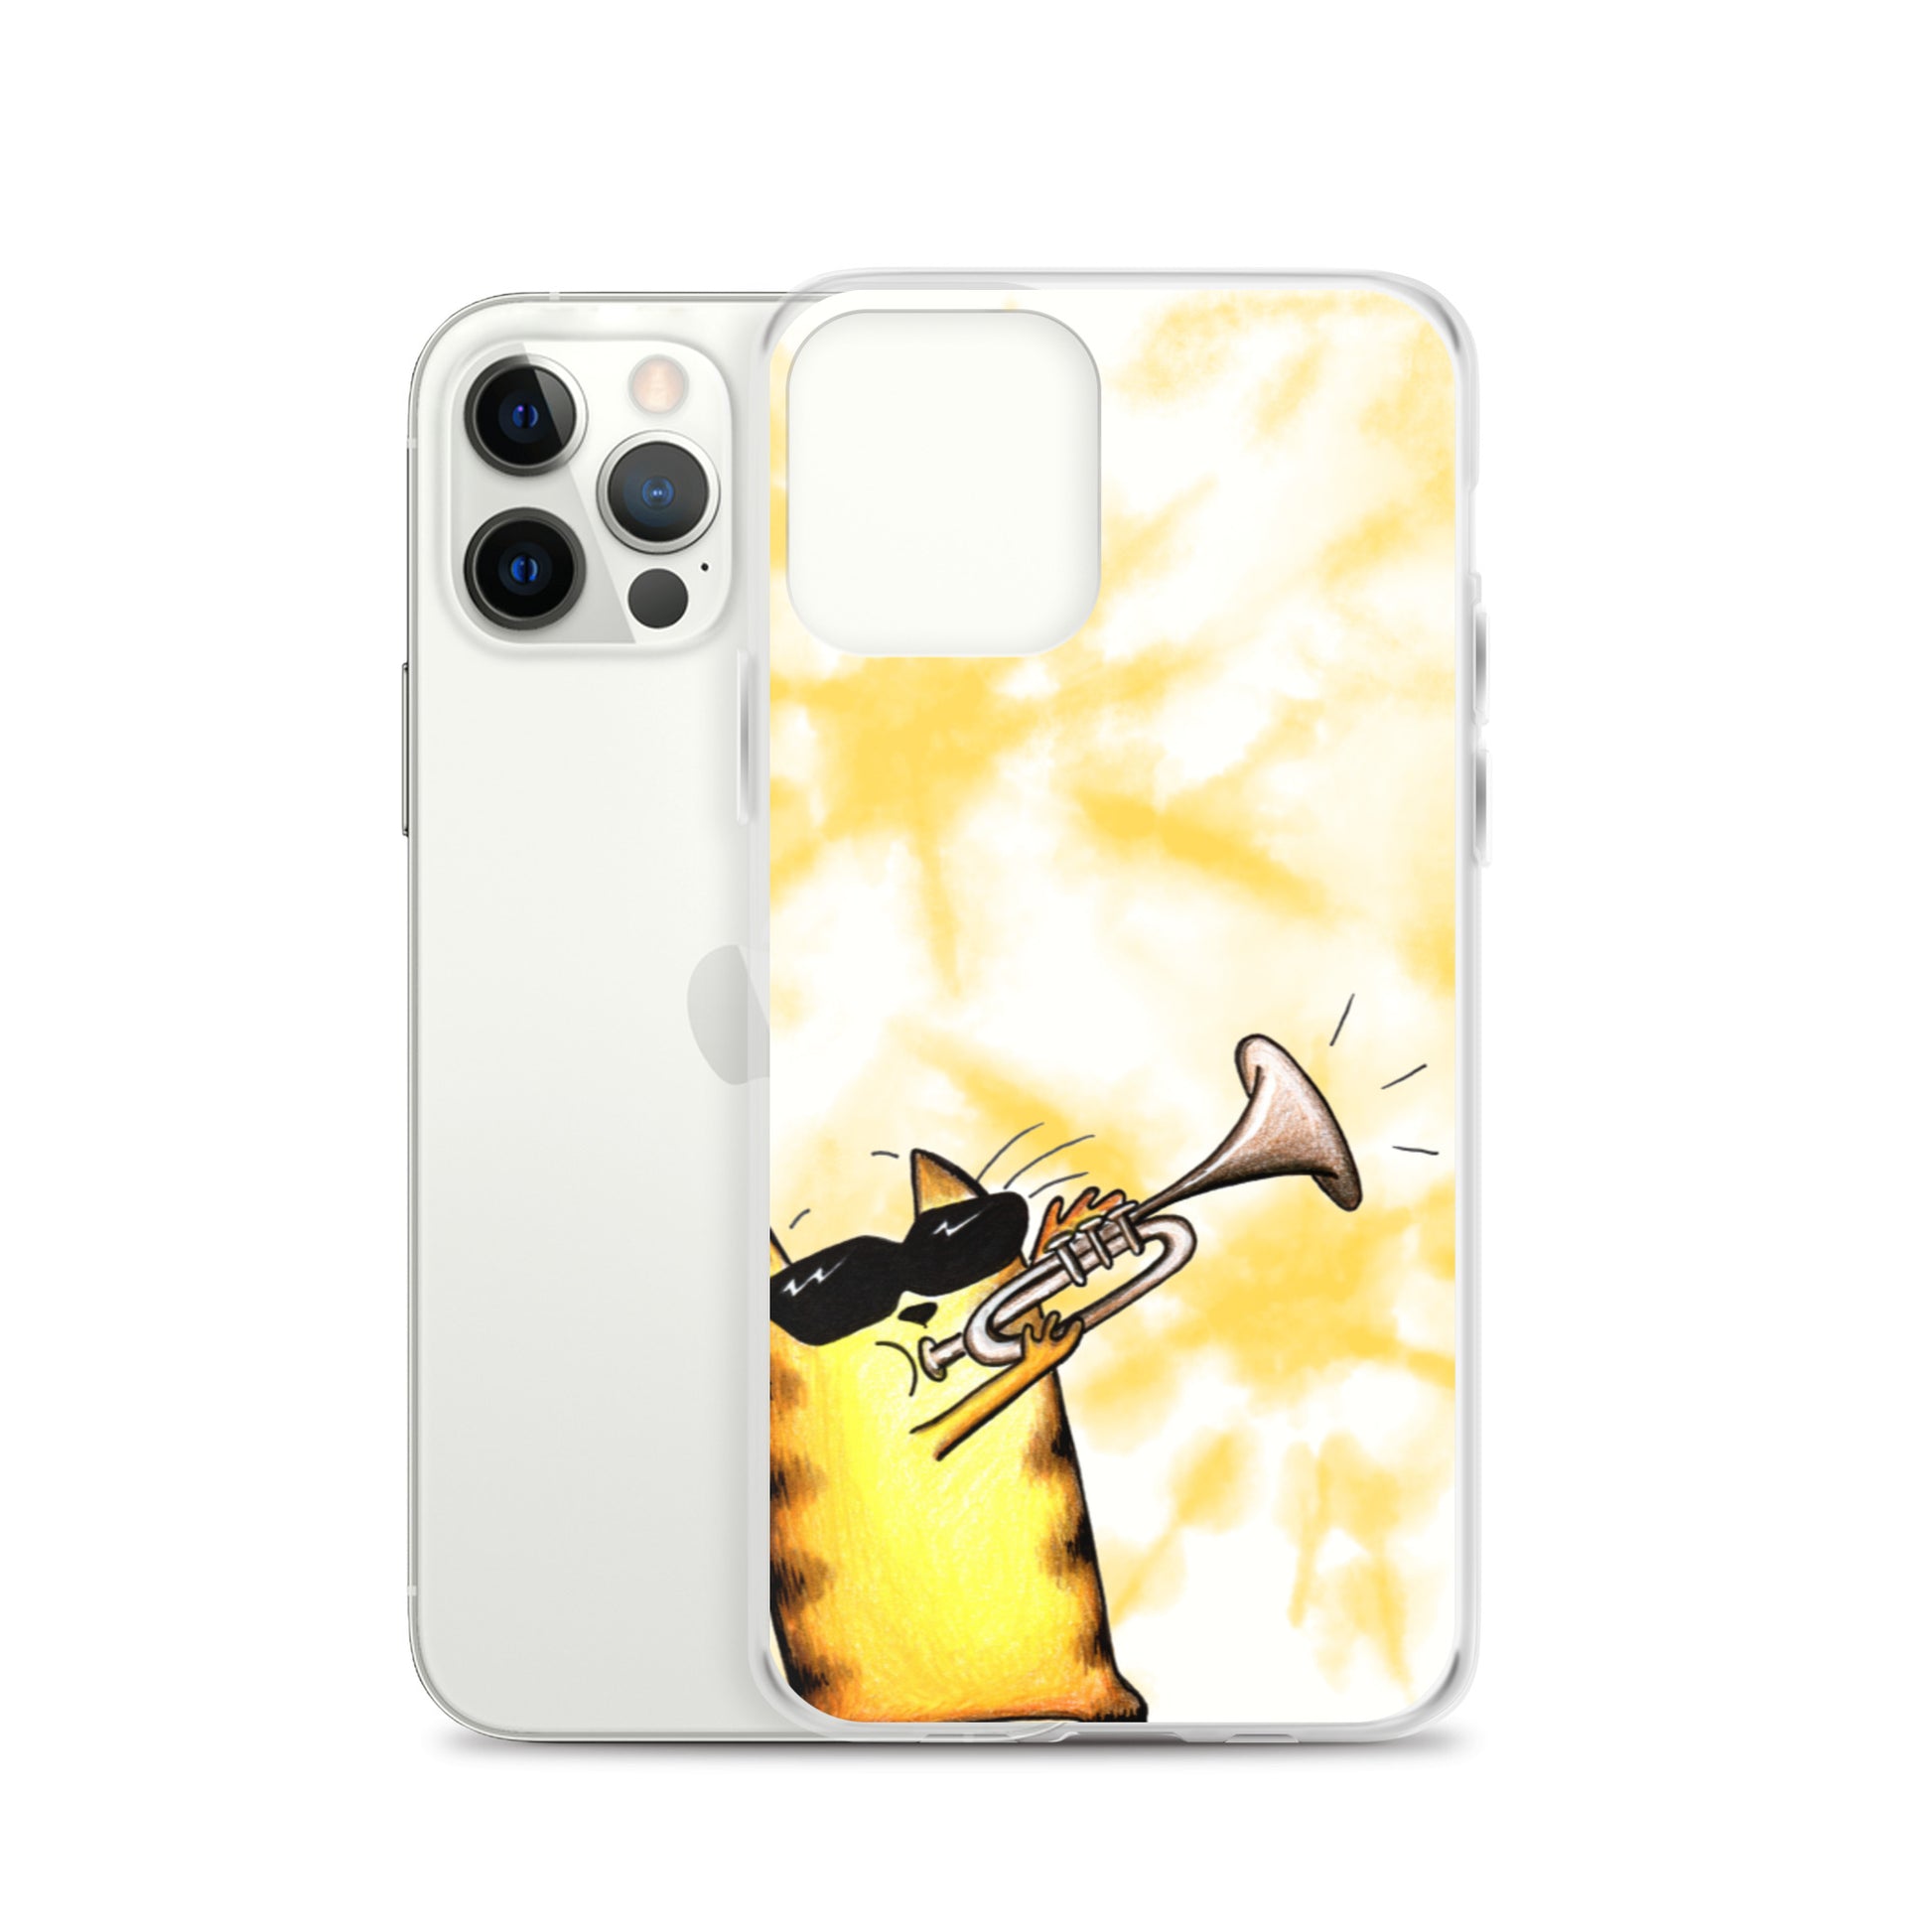 flexible yellow batik Iphone 12 pro case with cat plying trombone print